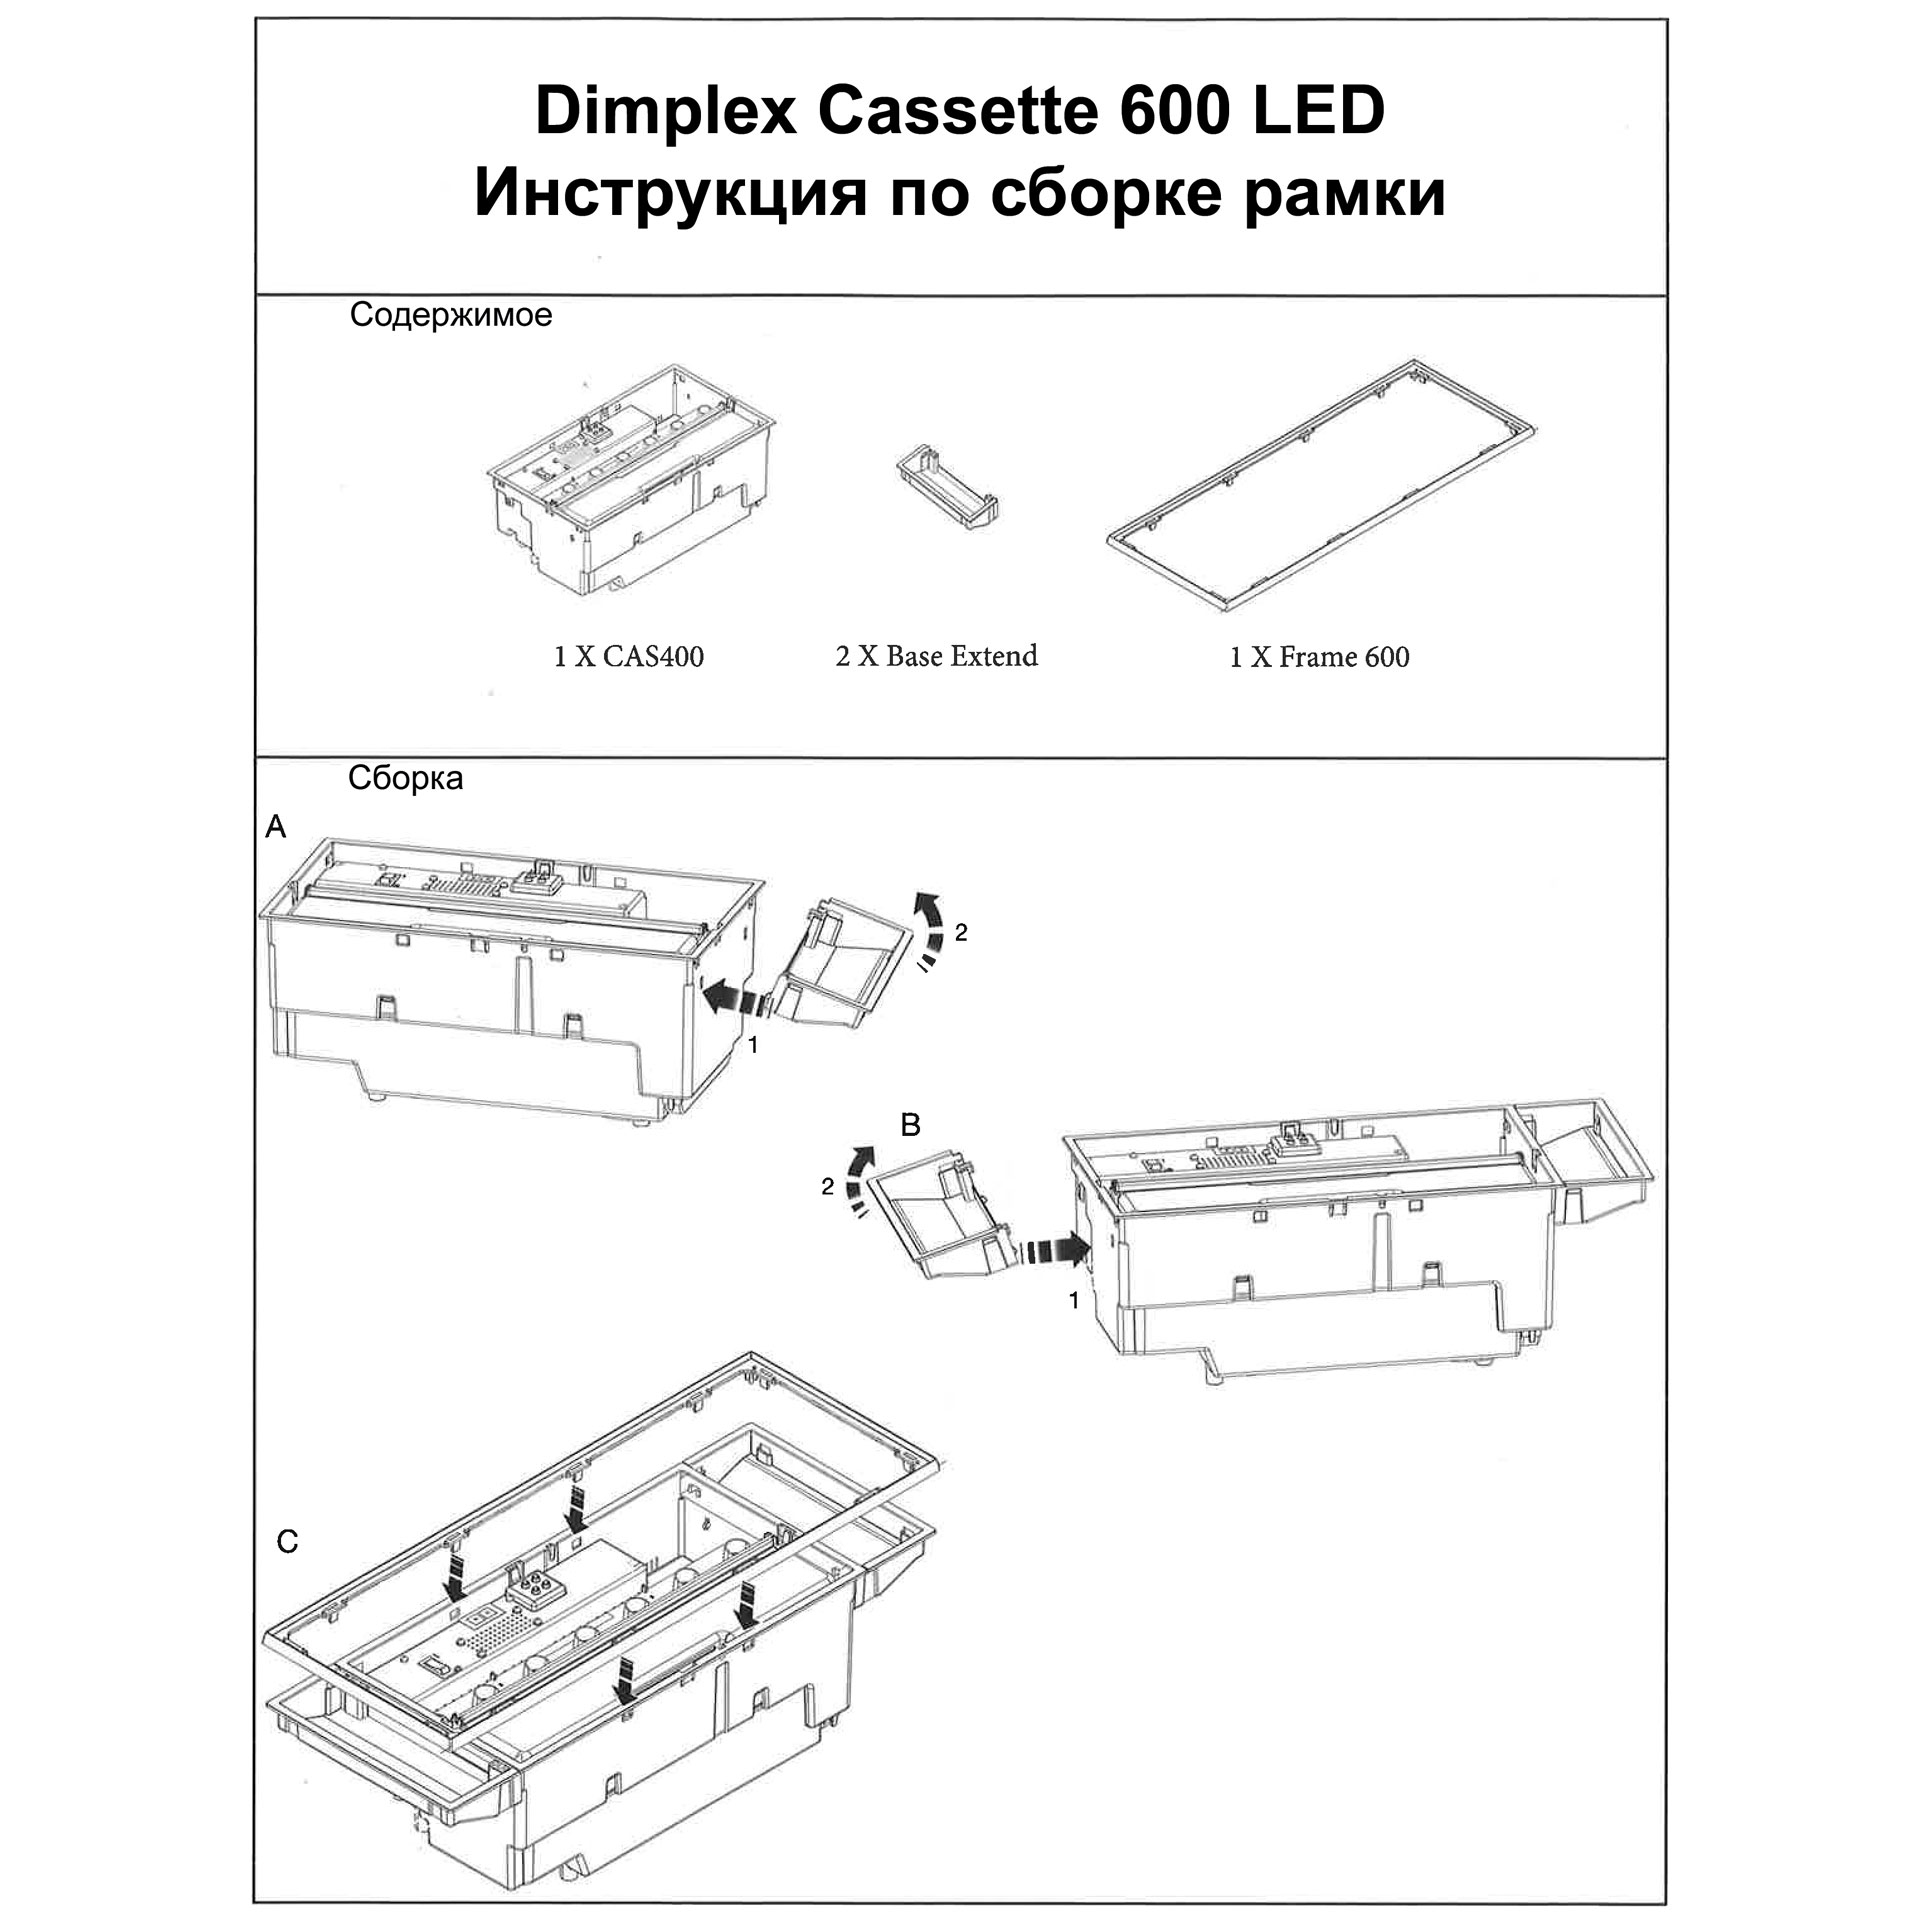 Dimplex Cassette 600 LED LOG (с дровами) Инструкция